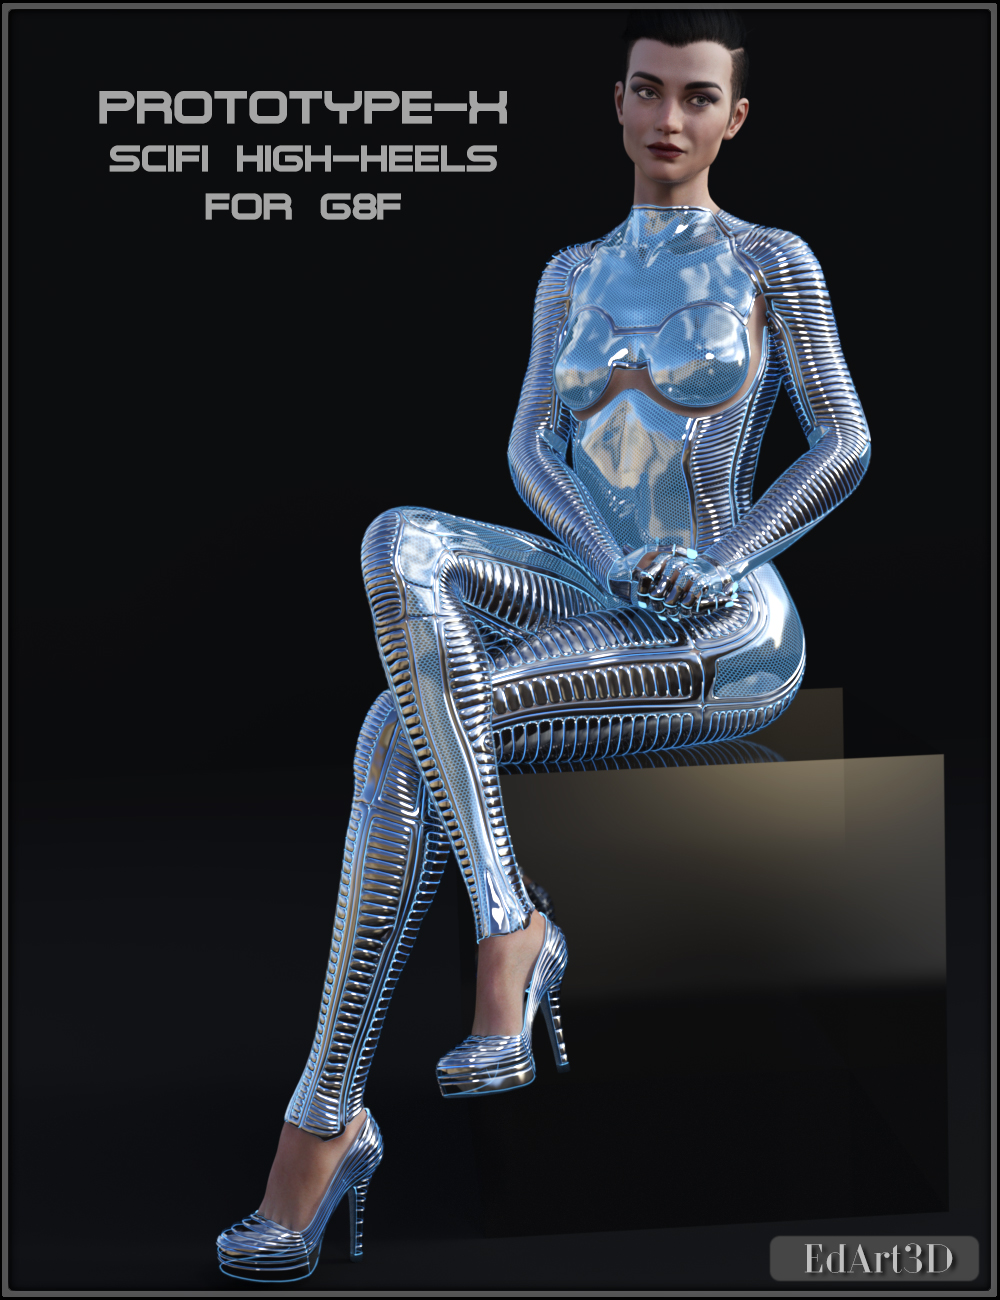 PROTOTYPE-X - SciFi High-Heels - for G8F (Repost)